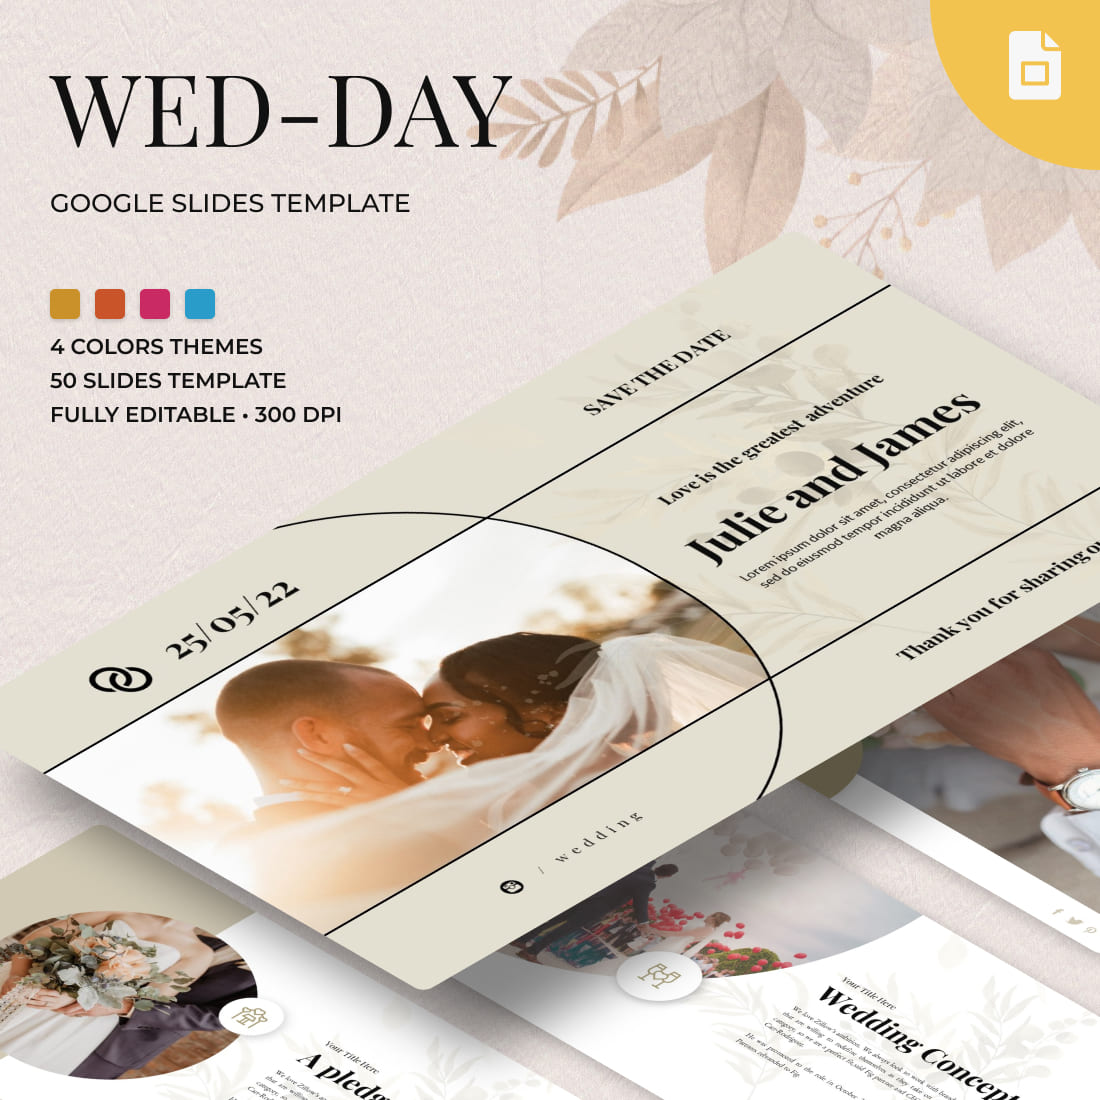 Wedding Day Google Slides Theme.